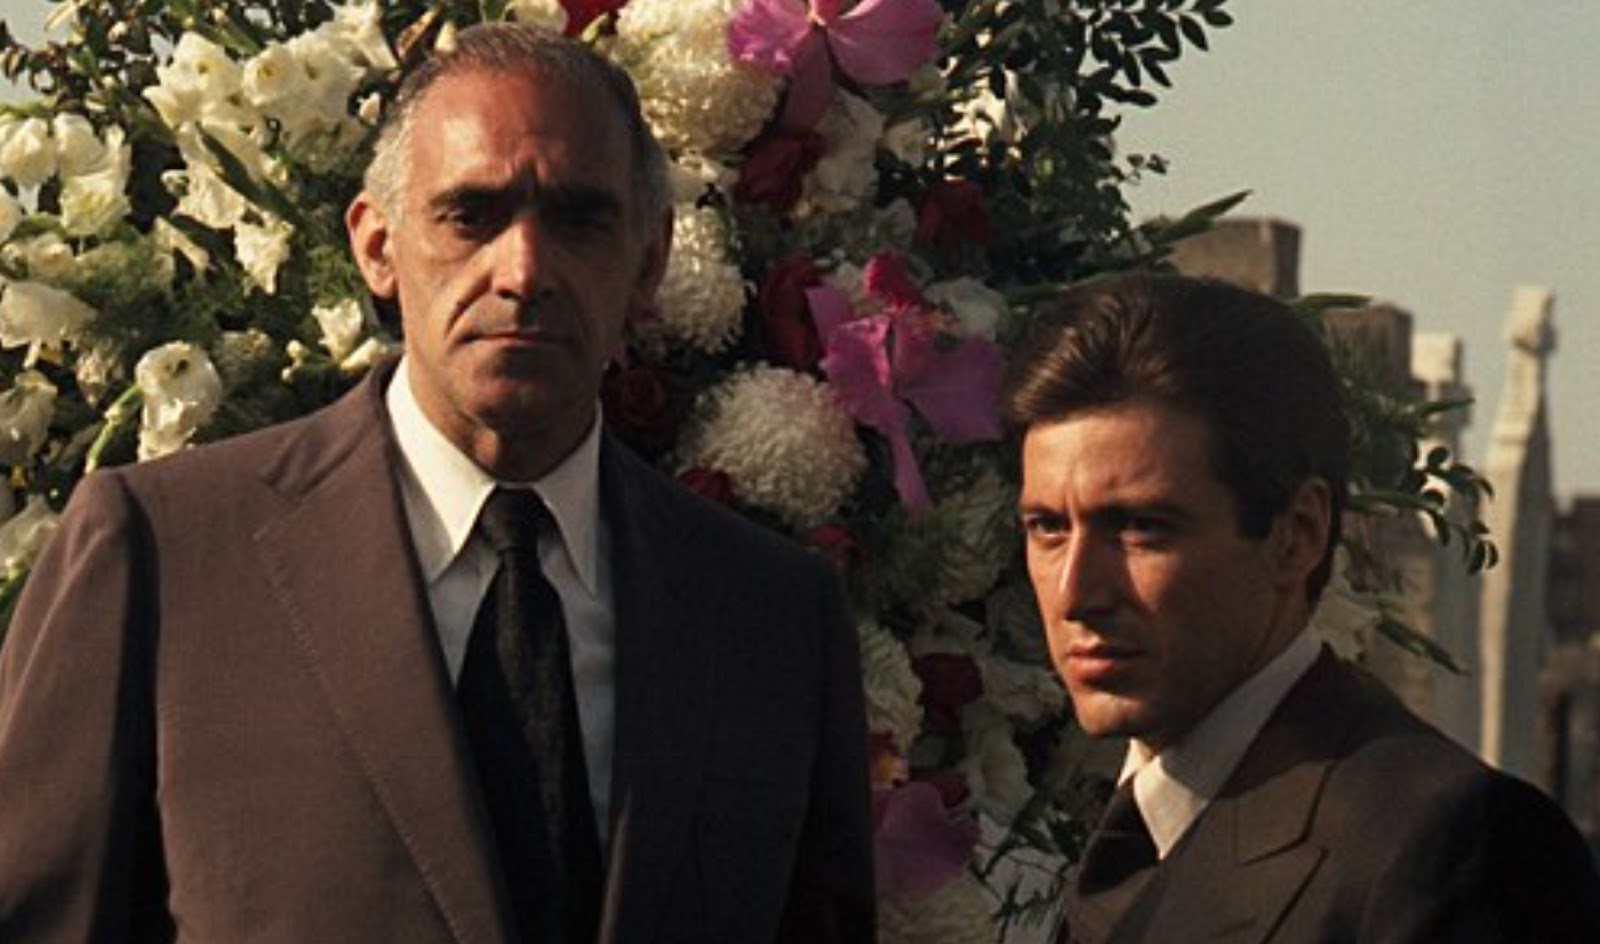 Abe Vigoda and Al Pacino star in The Godfather